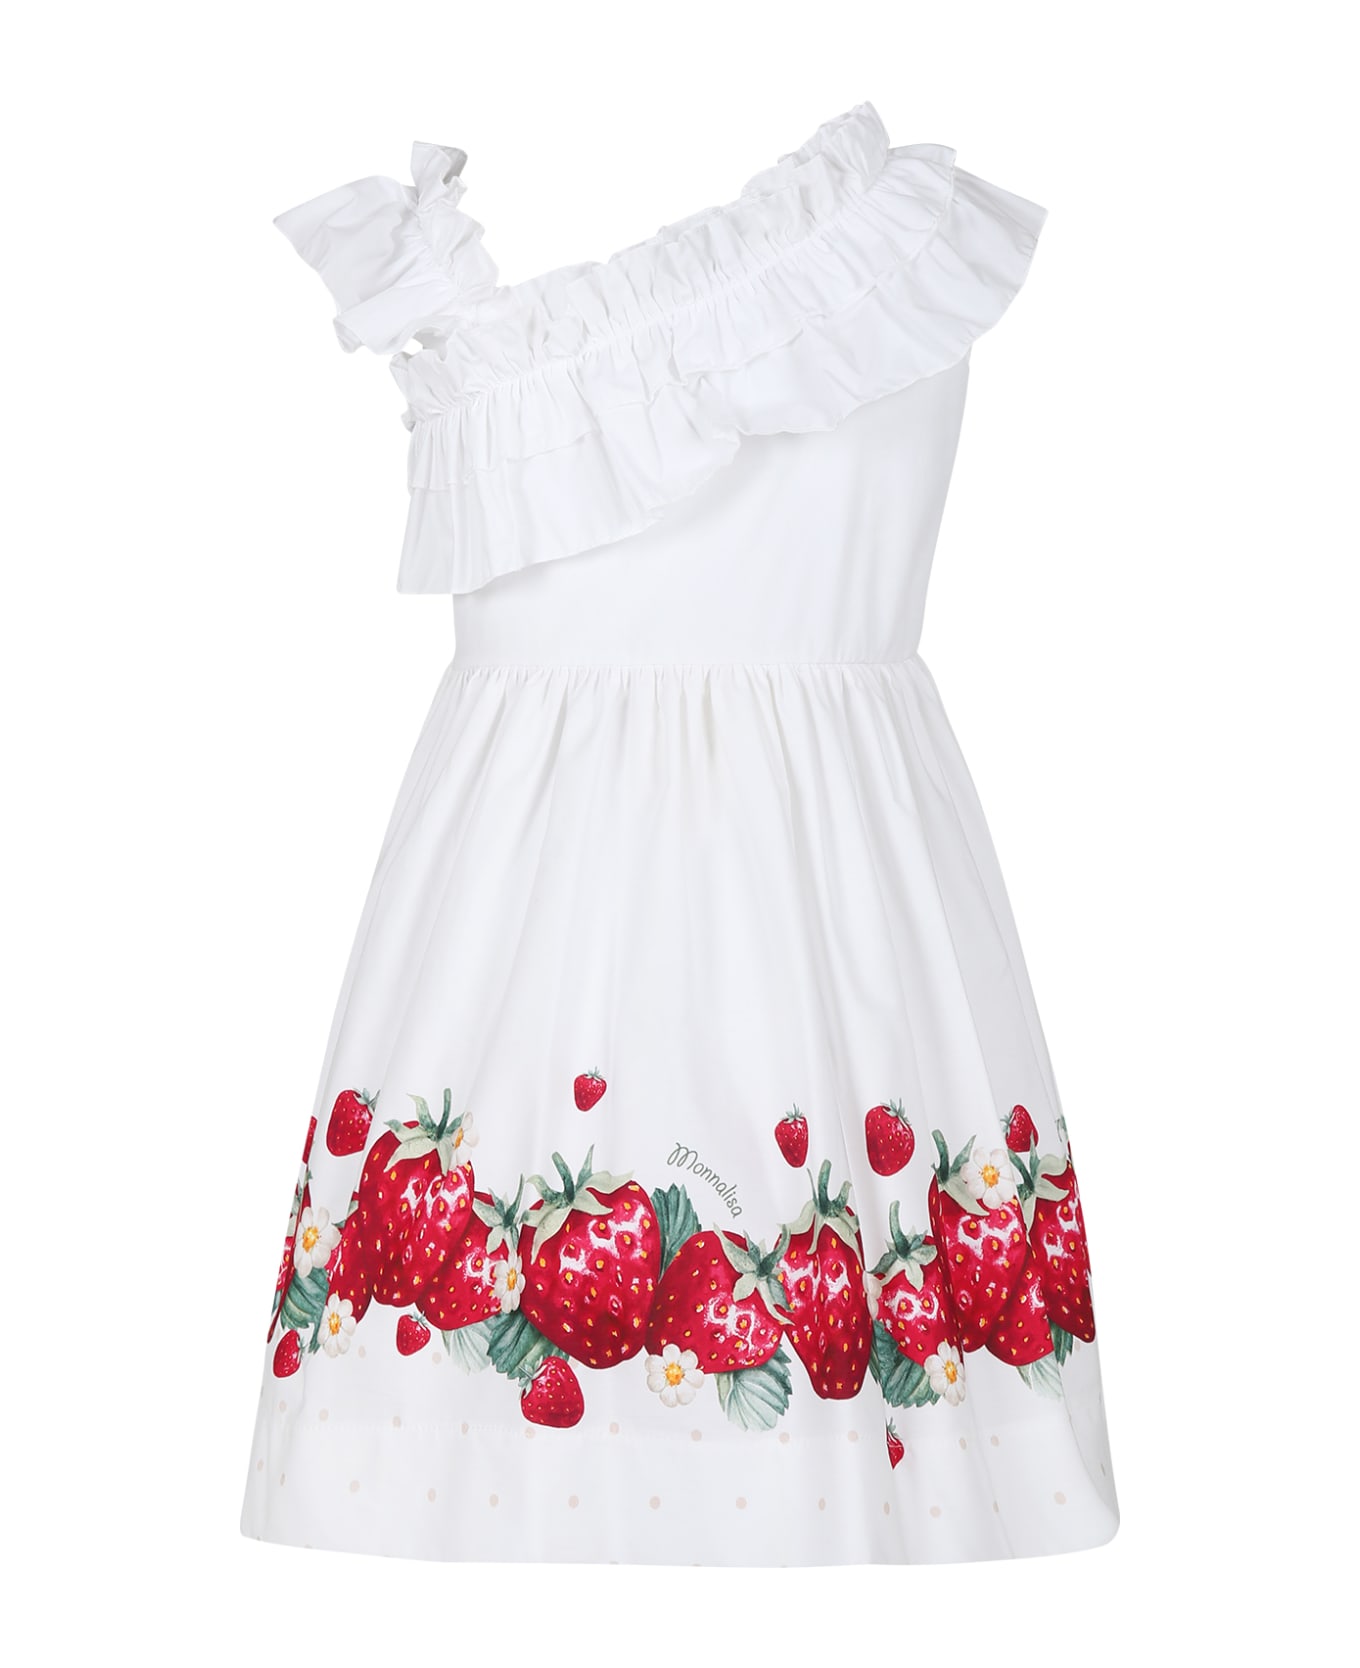 Monnalisa White Dress For Girl With Strawberry Print - White